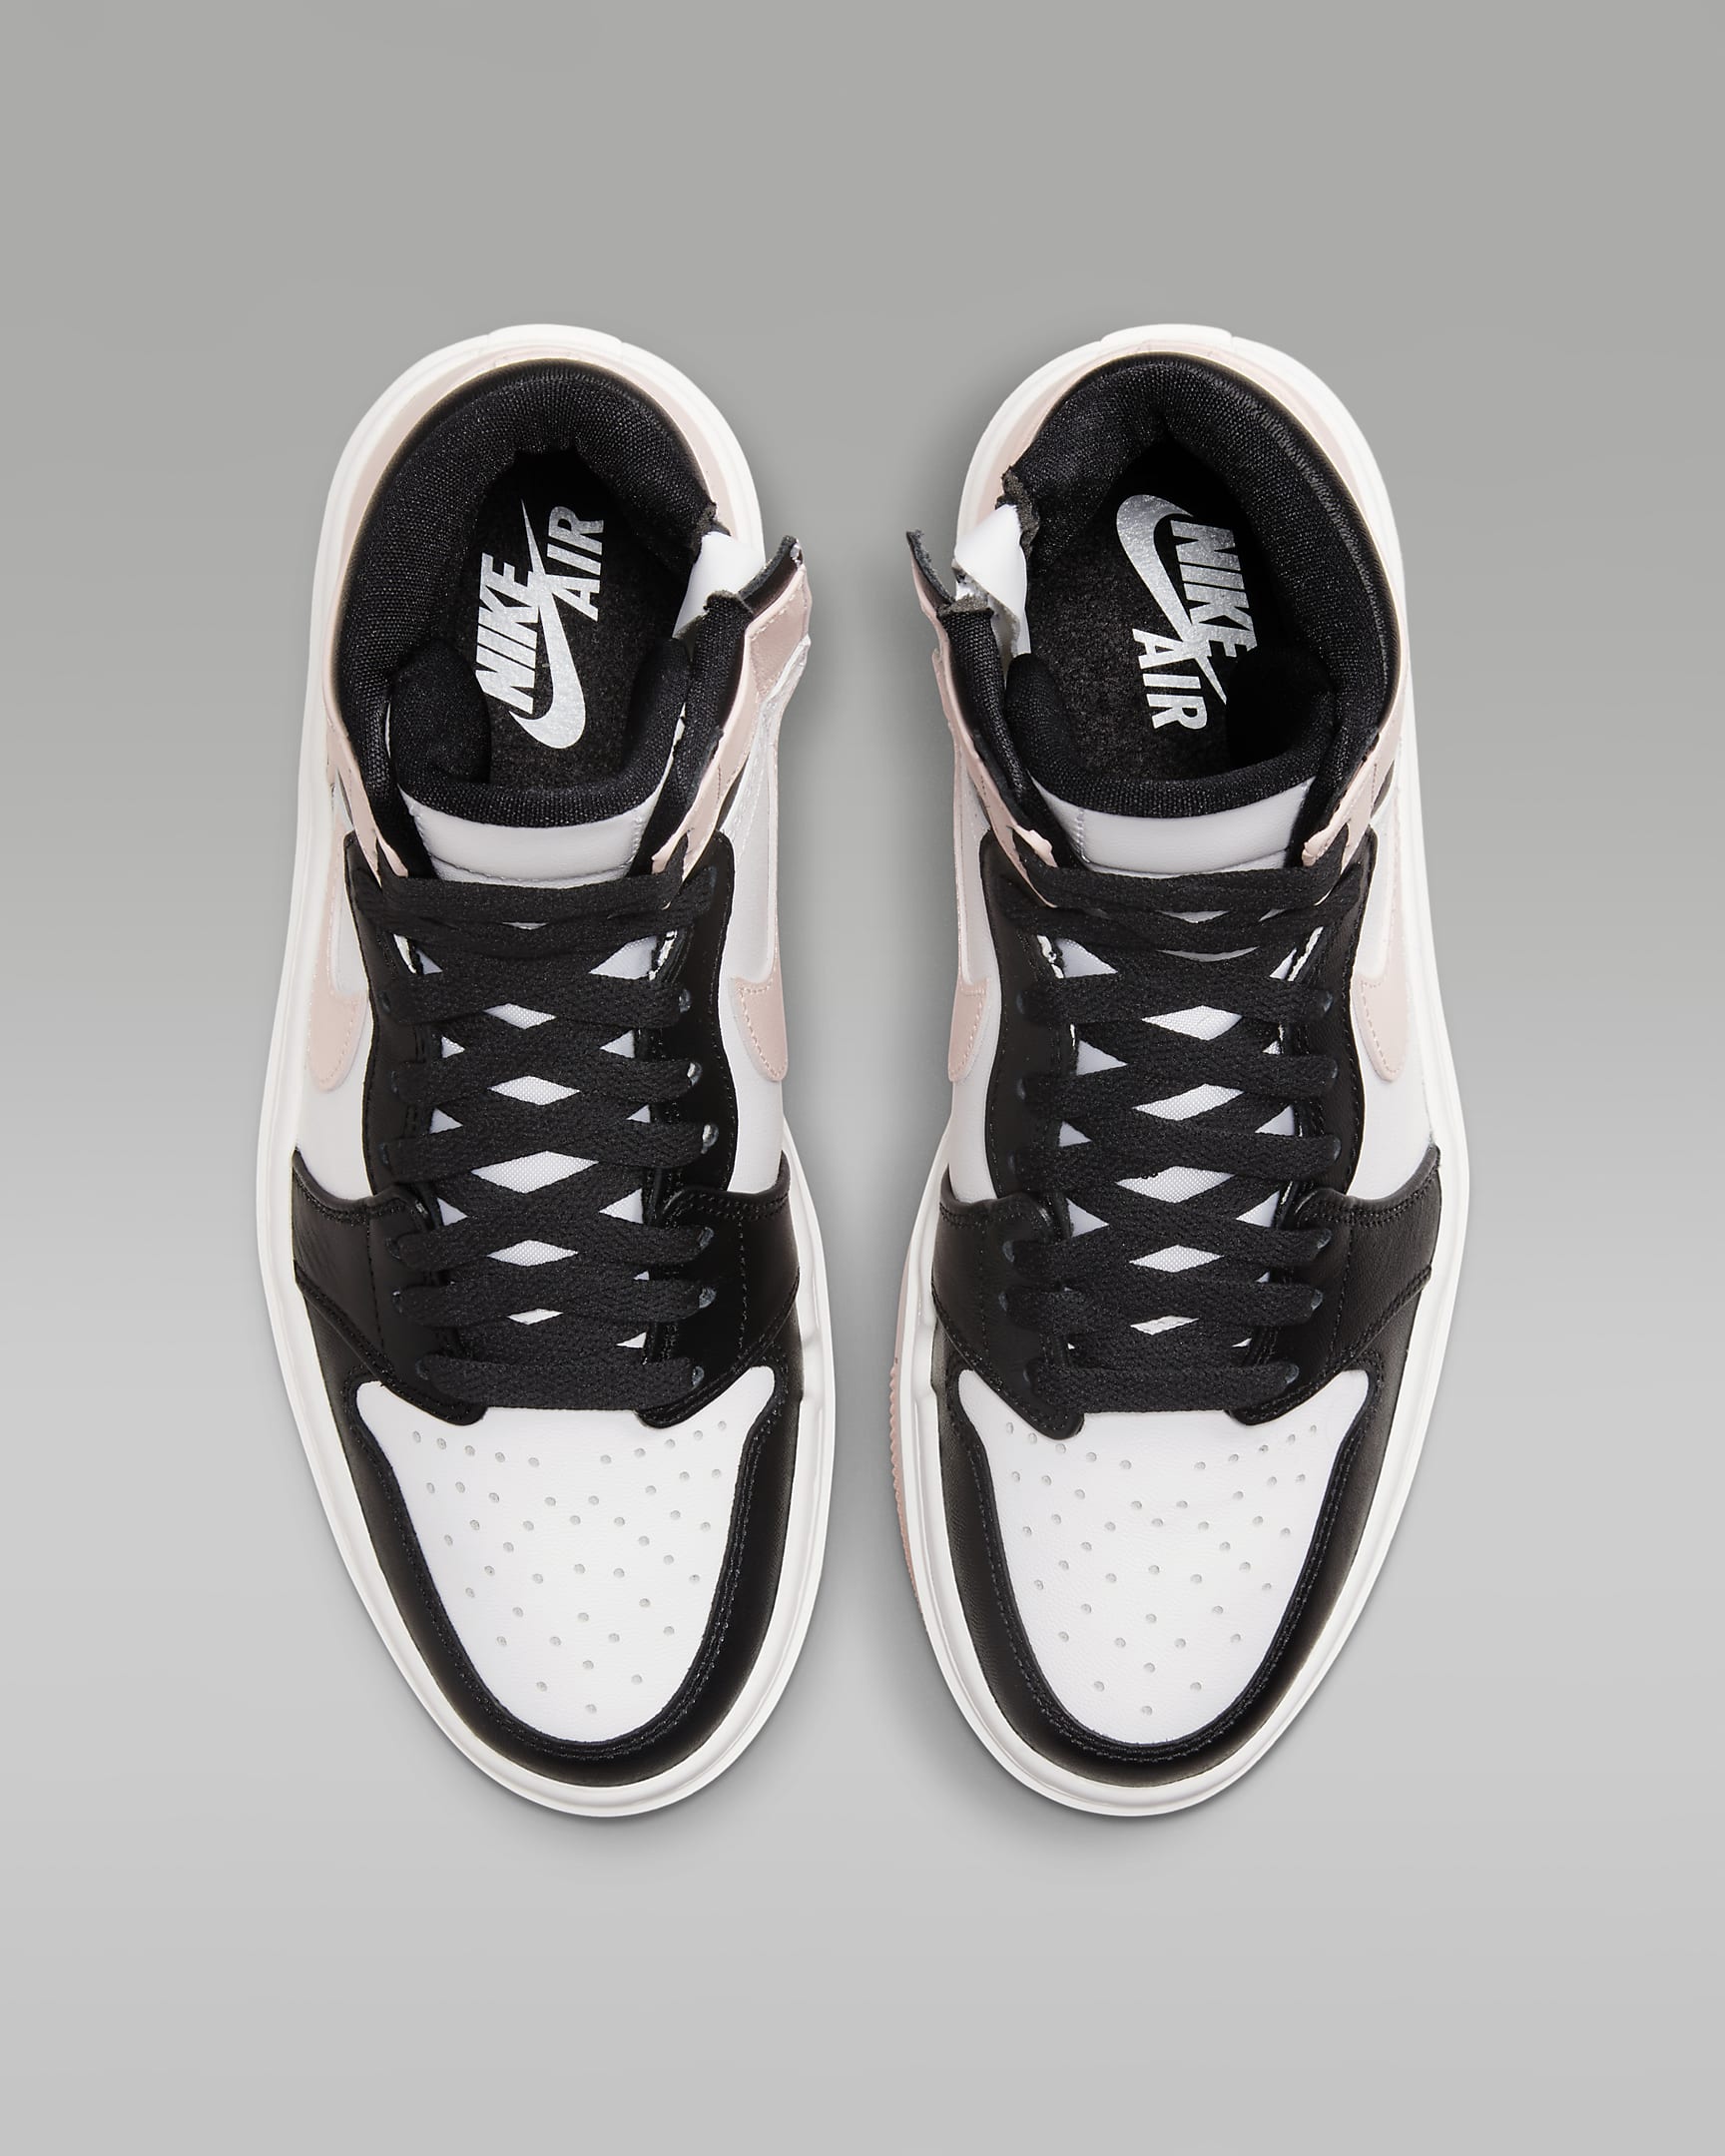 Air Jordan 1 Elevate High Women's Shoes - Black/White/Sail/Atmosphere